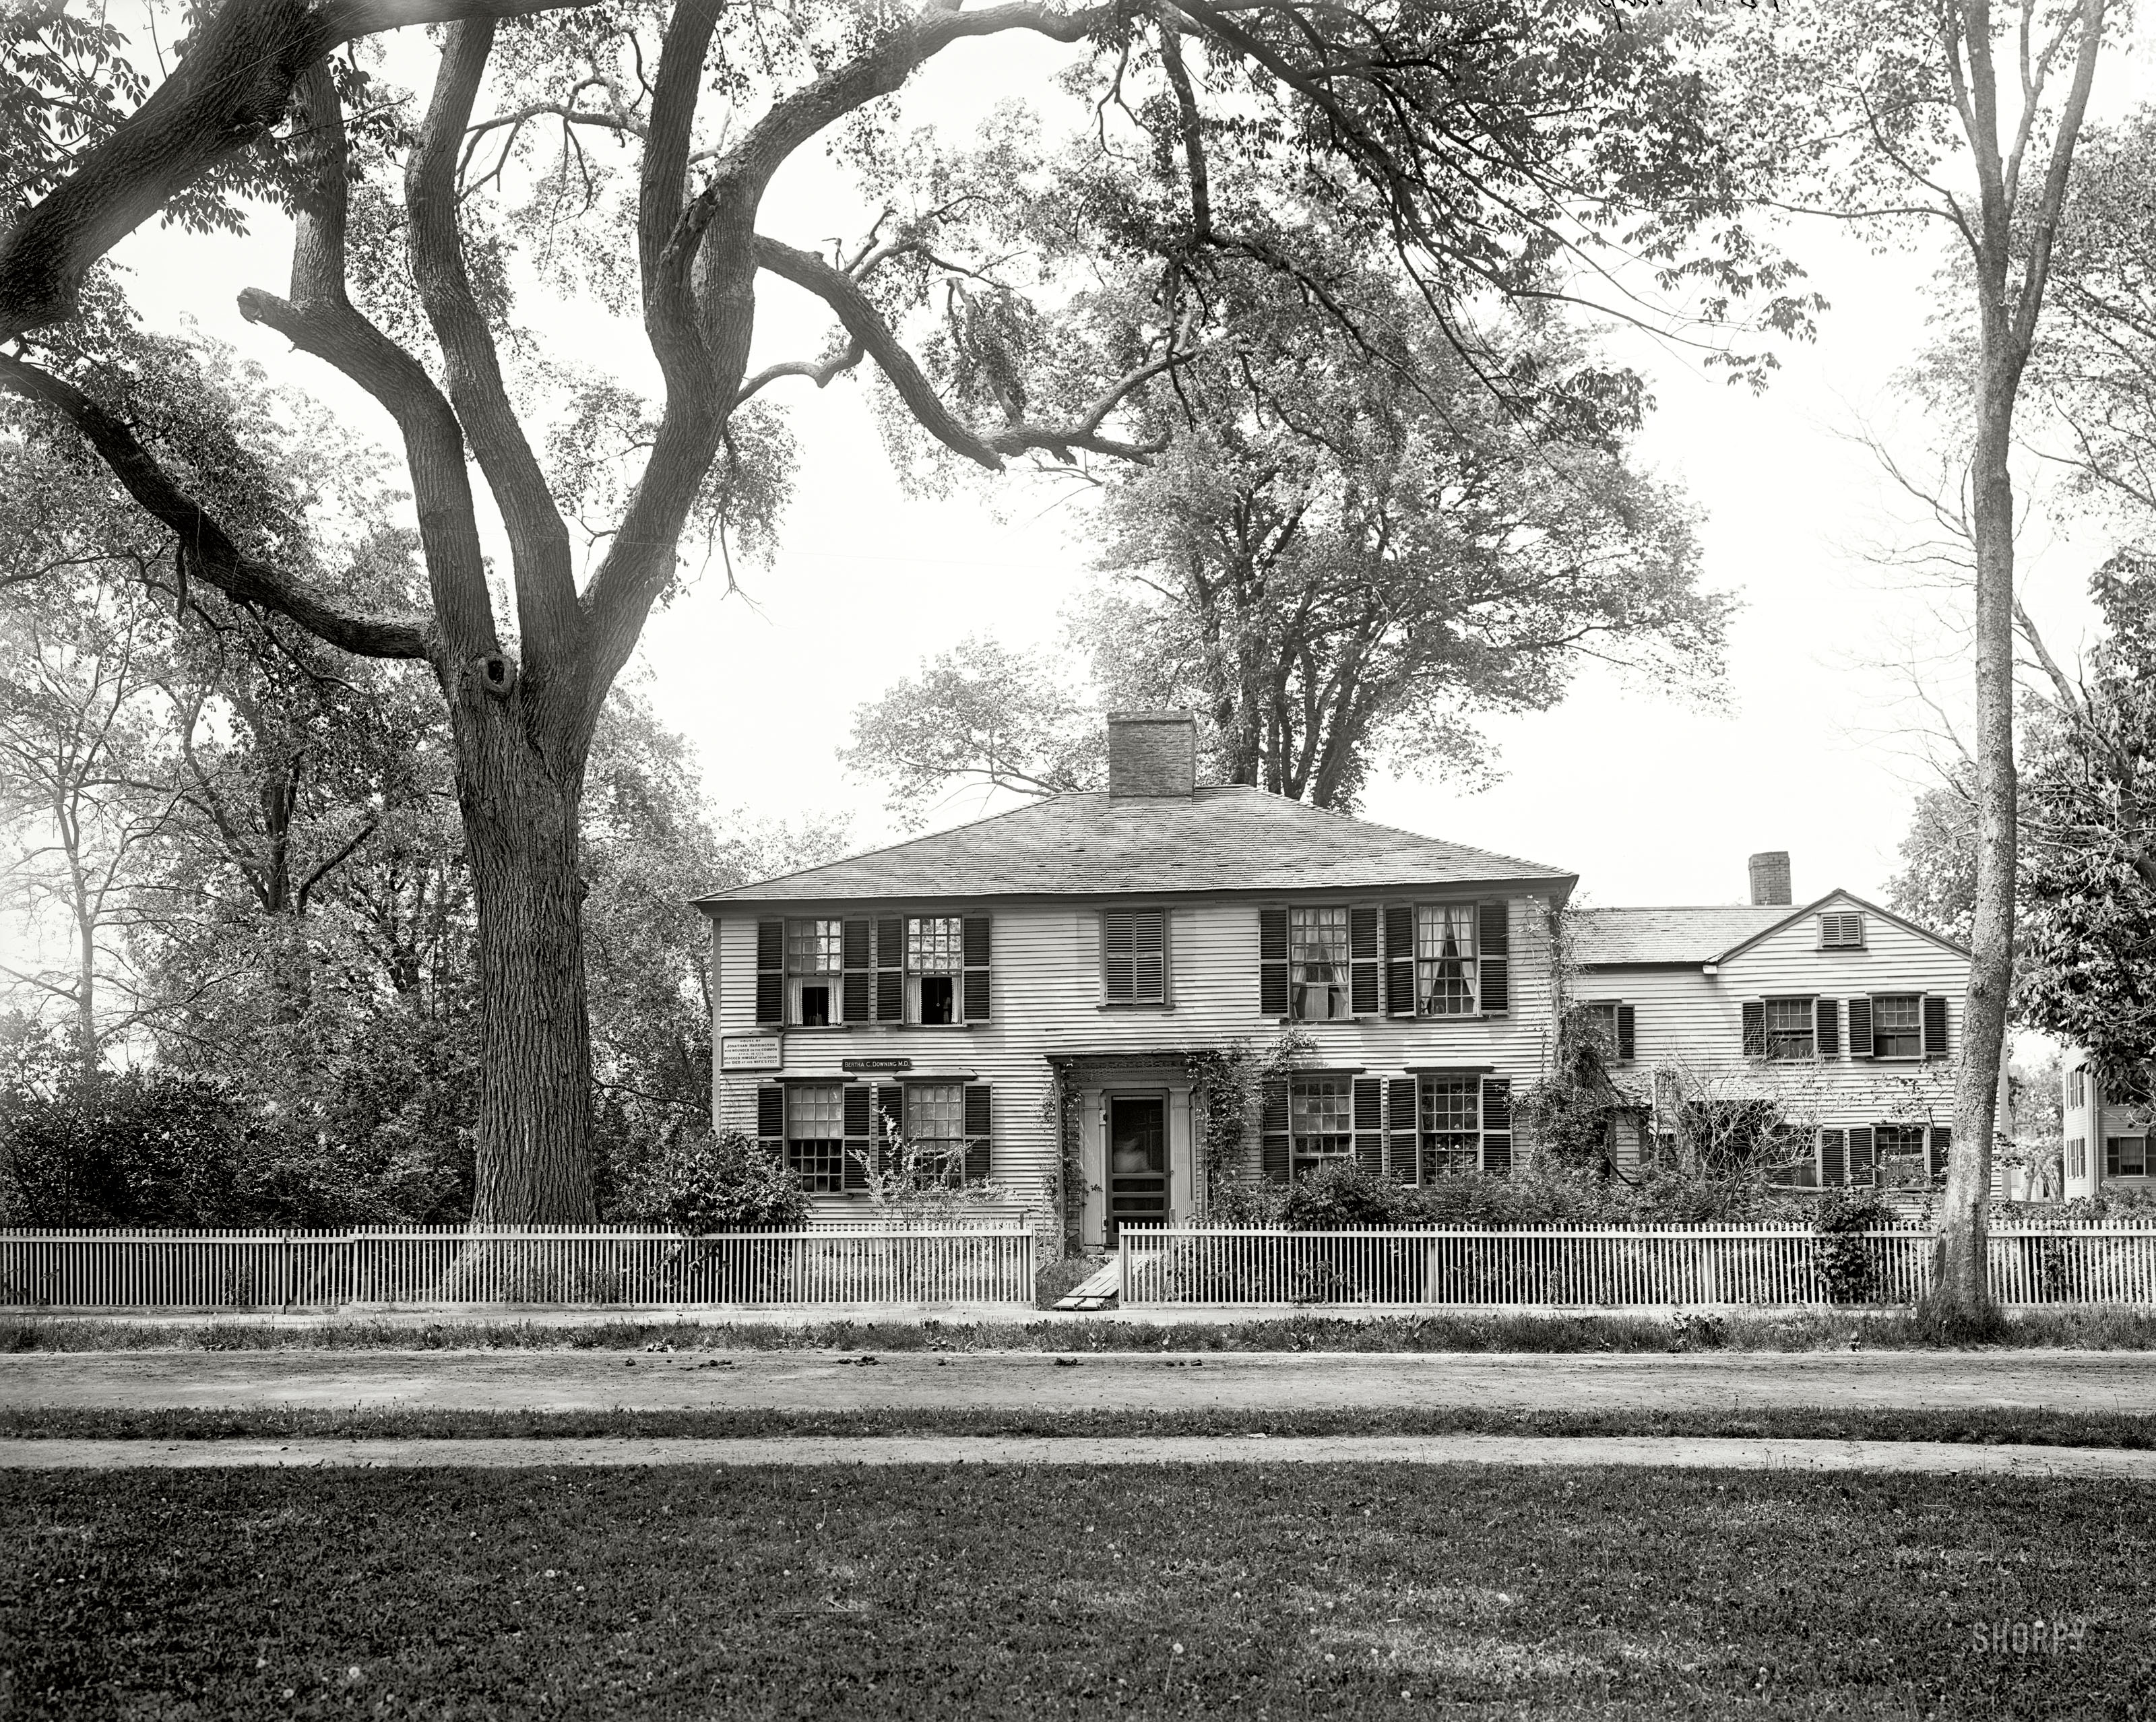 Lexington, Massachusetts, circa 1901. "Harrington House." The residence of one Dr. Bertha C. Downing. Detroit Publishing Co. glass negative. View full size.